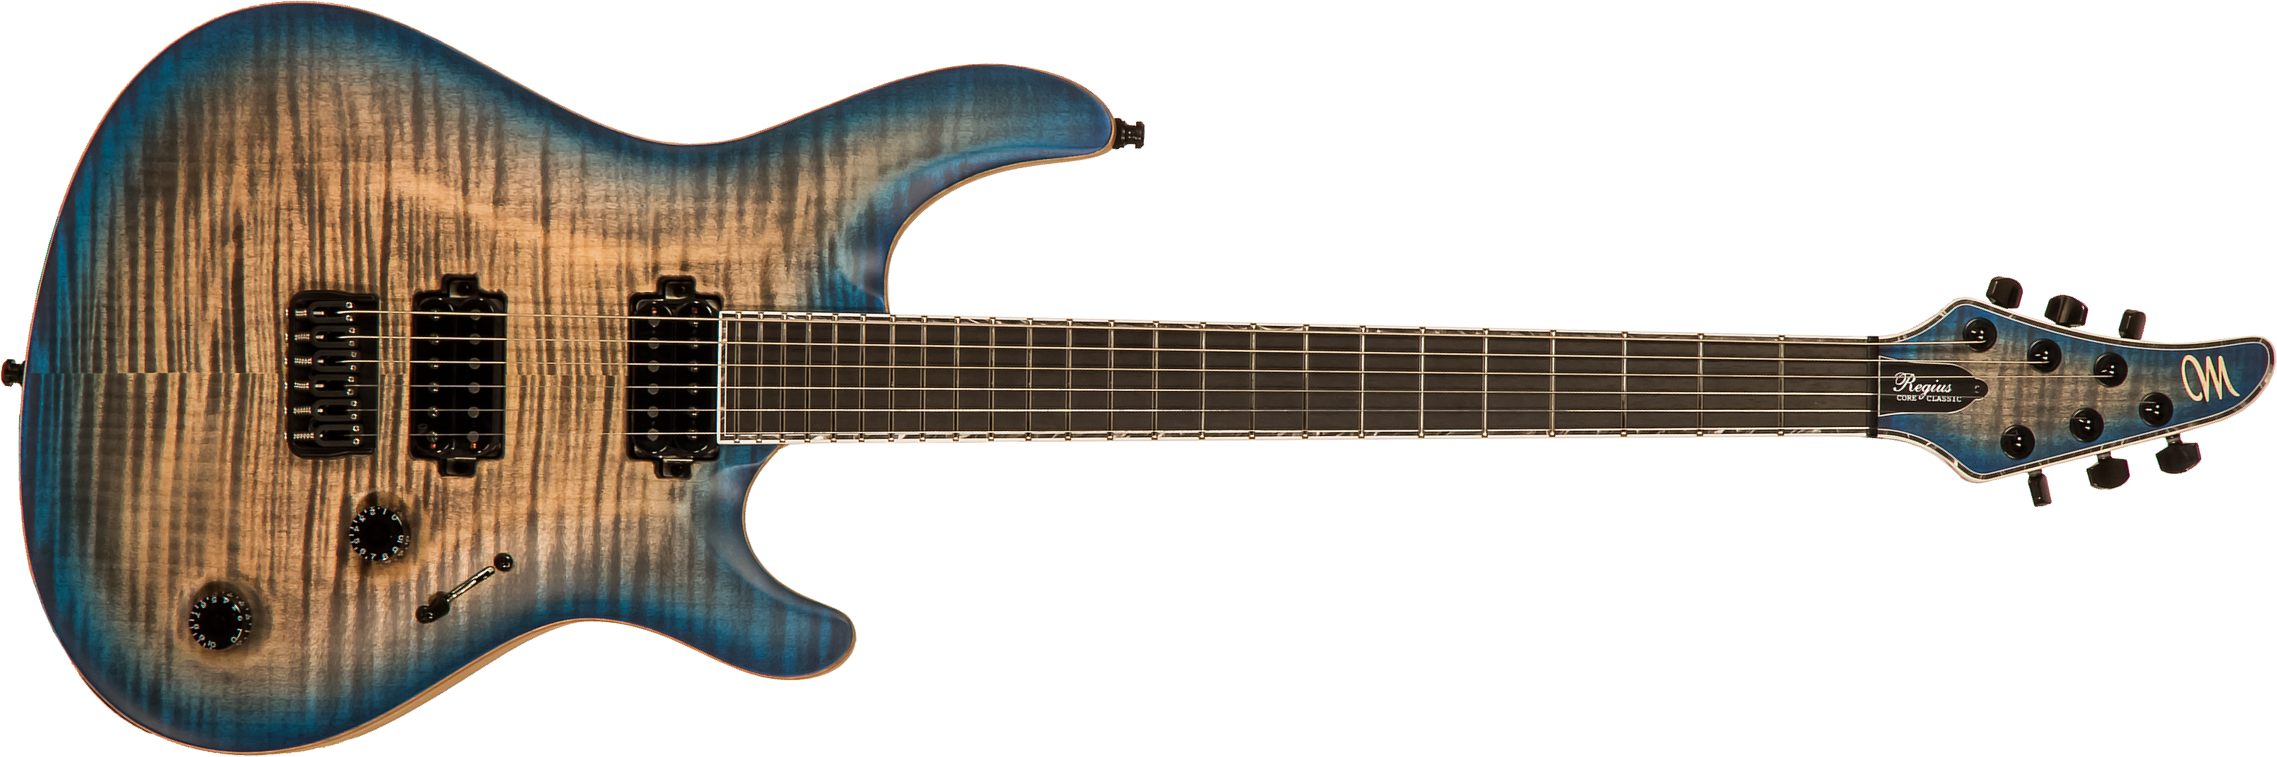 Mayones Guitars Regius Core Classic 6 Ash 2h Tko Eb #rf2204447 - Jean Black 2-tone Blue Sunburst Satine - Guitarra eléctrica de doble corte. - Main pi